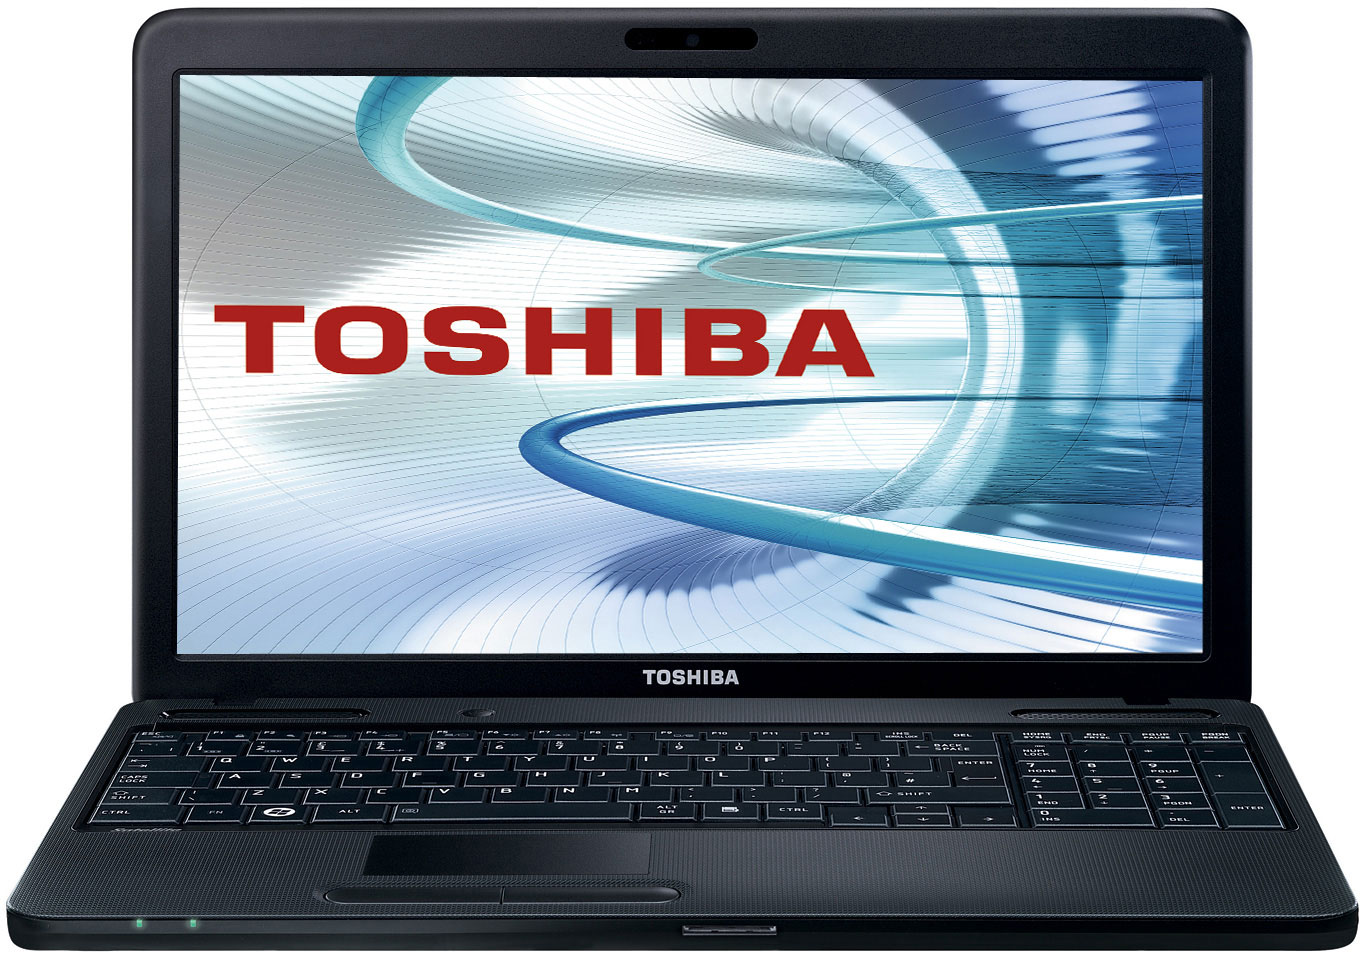 Drivers Free: Drivers Notebook Toshiba Satellite C660D Windows XP